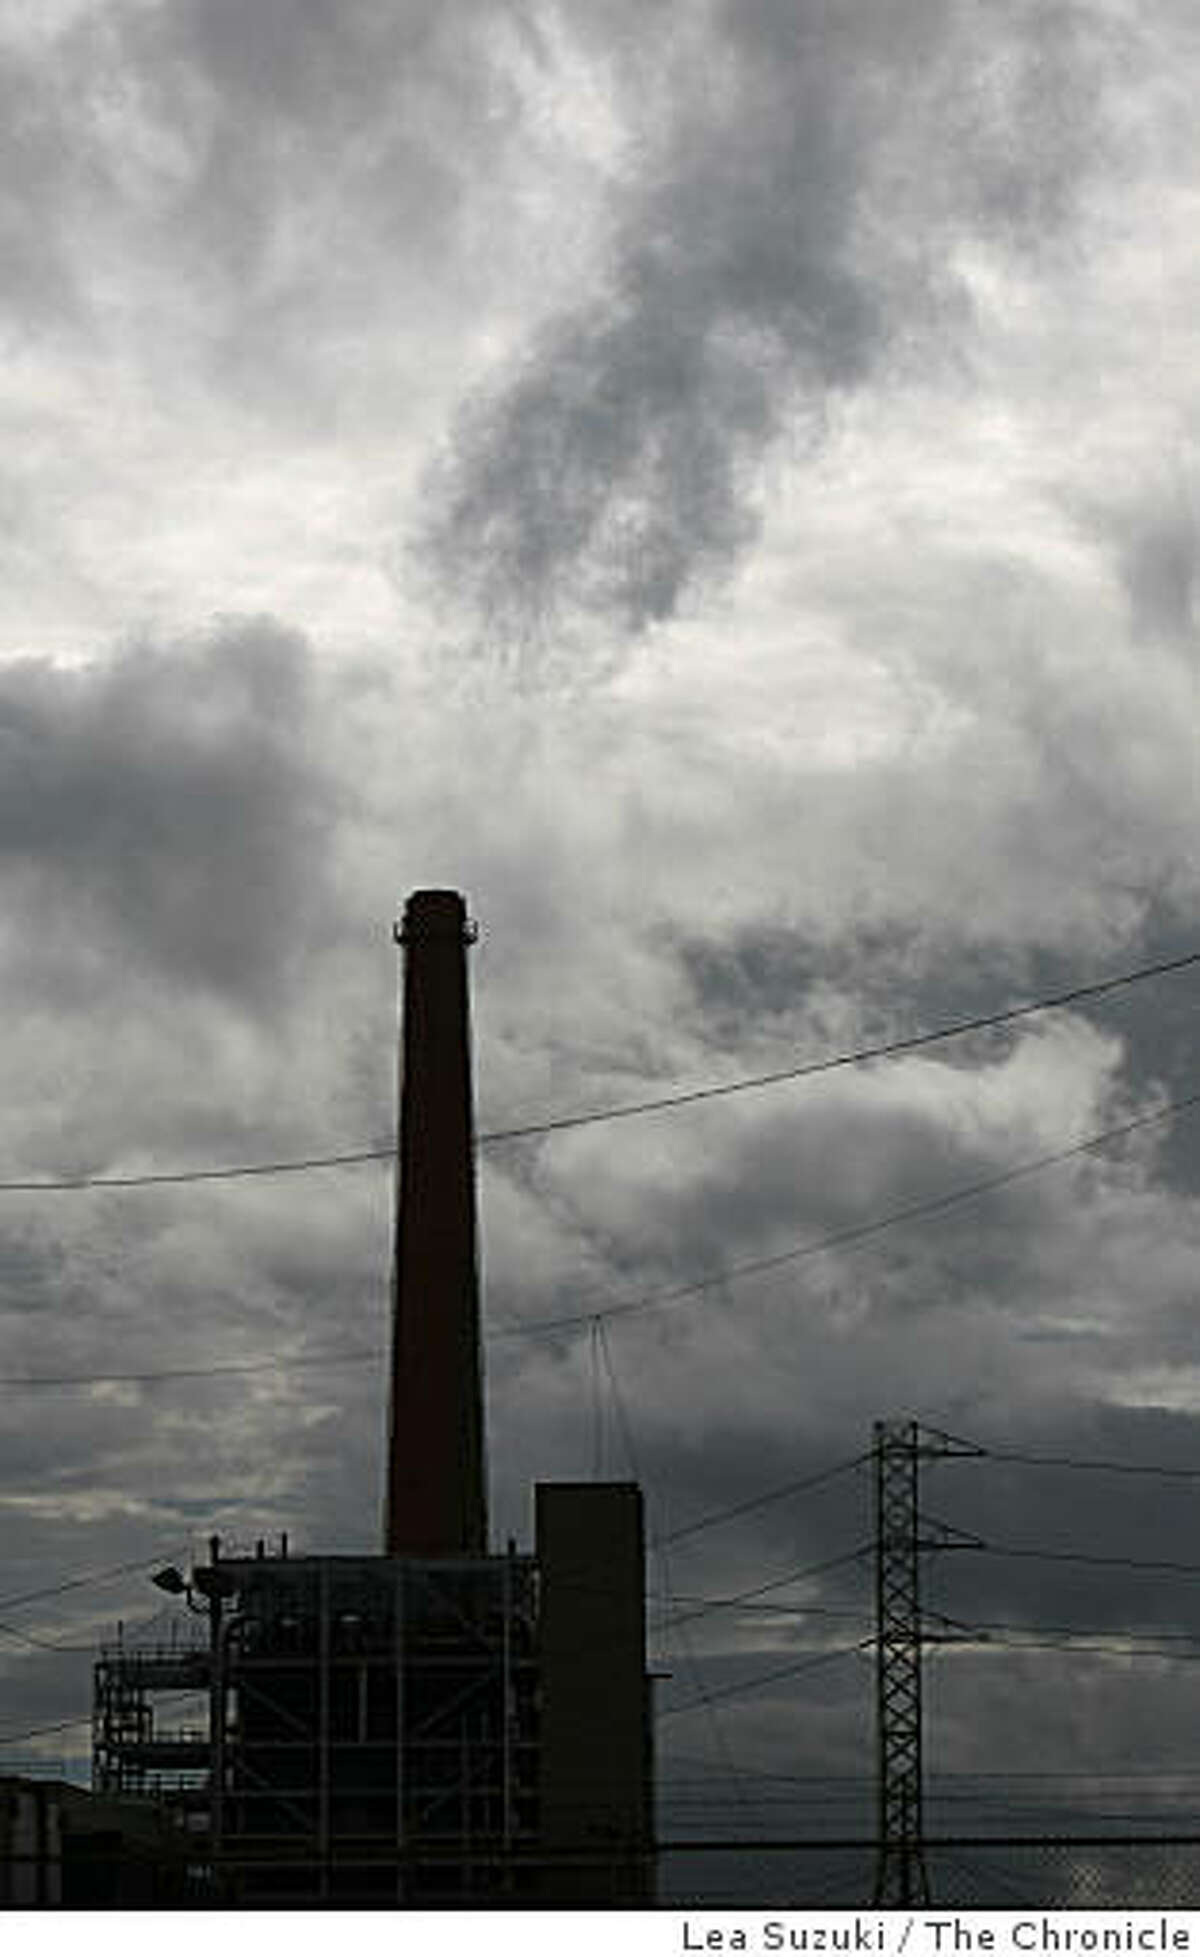 The Potrero power plant photographed on Monday, November 3, 2008 in San Francisco, Calif.